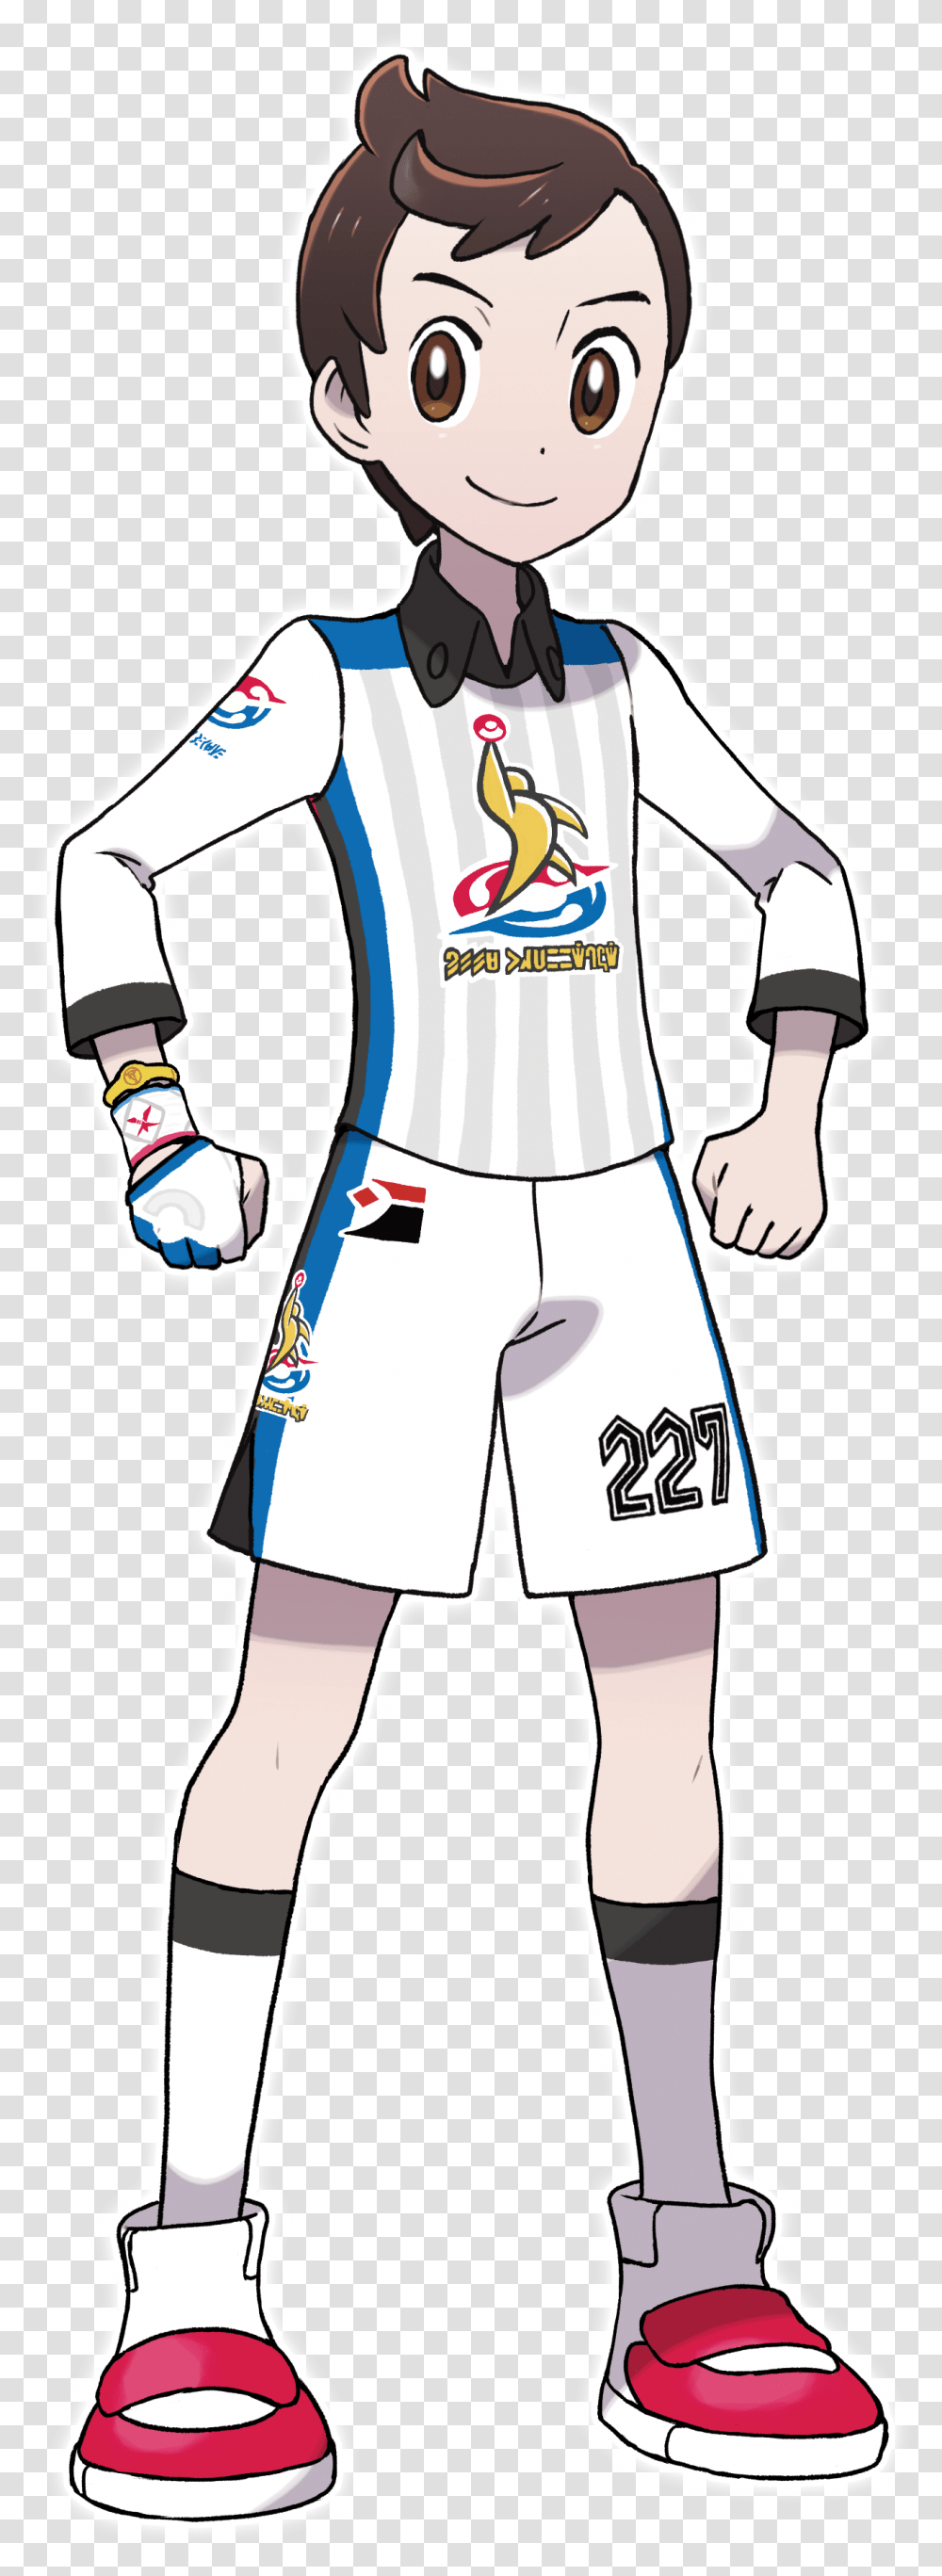 Male Protagonist Sword Pokemon Gym Uniform, Person, Human, Astronaut, Clothing Transparent Png